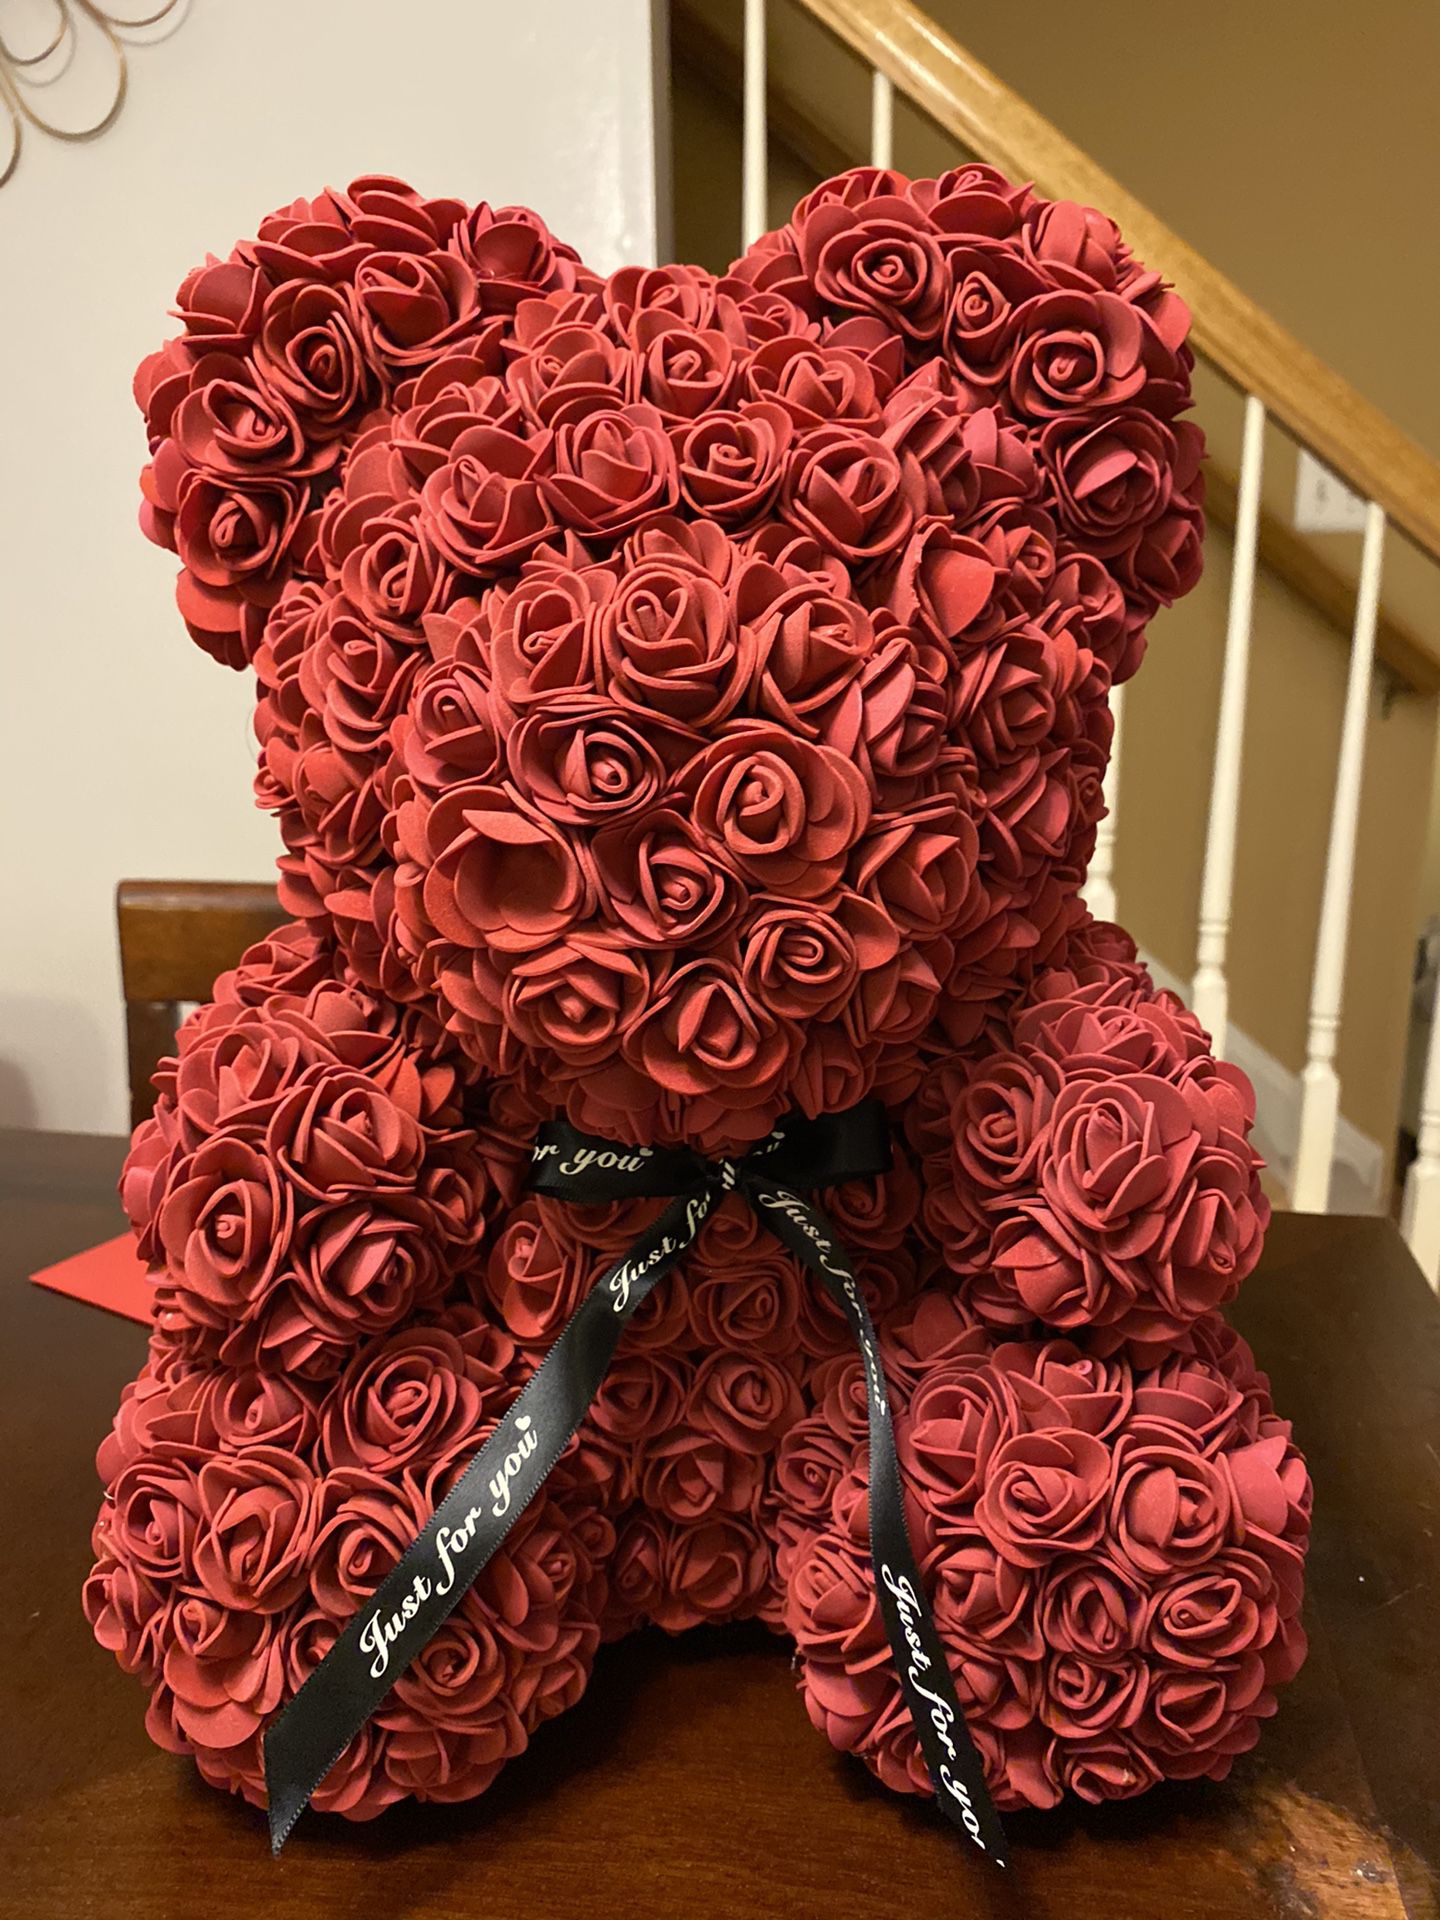 Red rose teddy bear Valentine’s Day gift